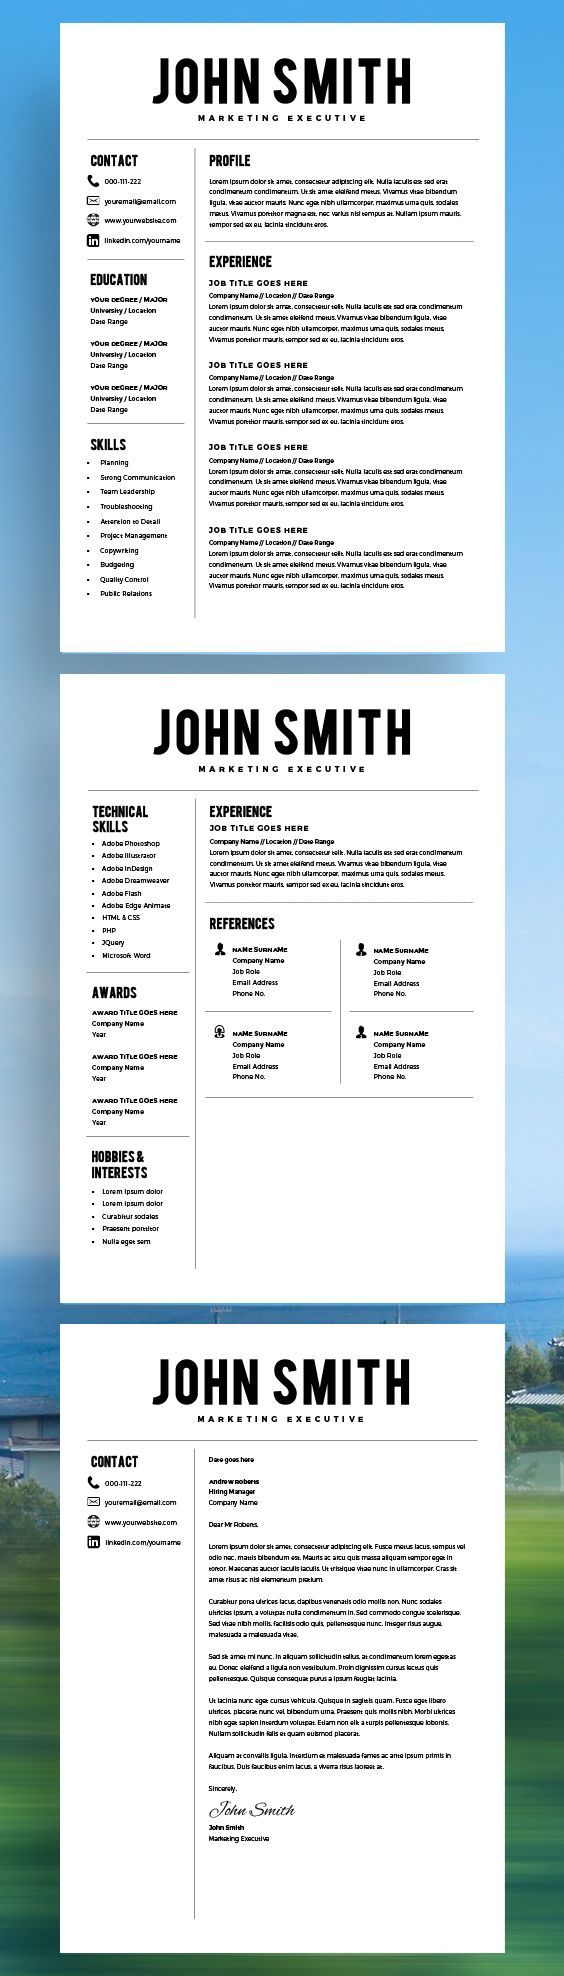 resume template resume builder cv template free cover letter